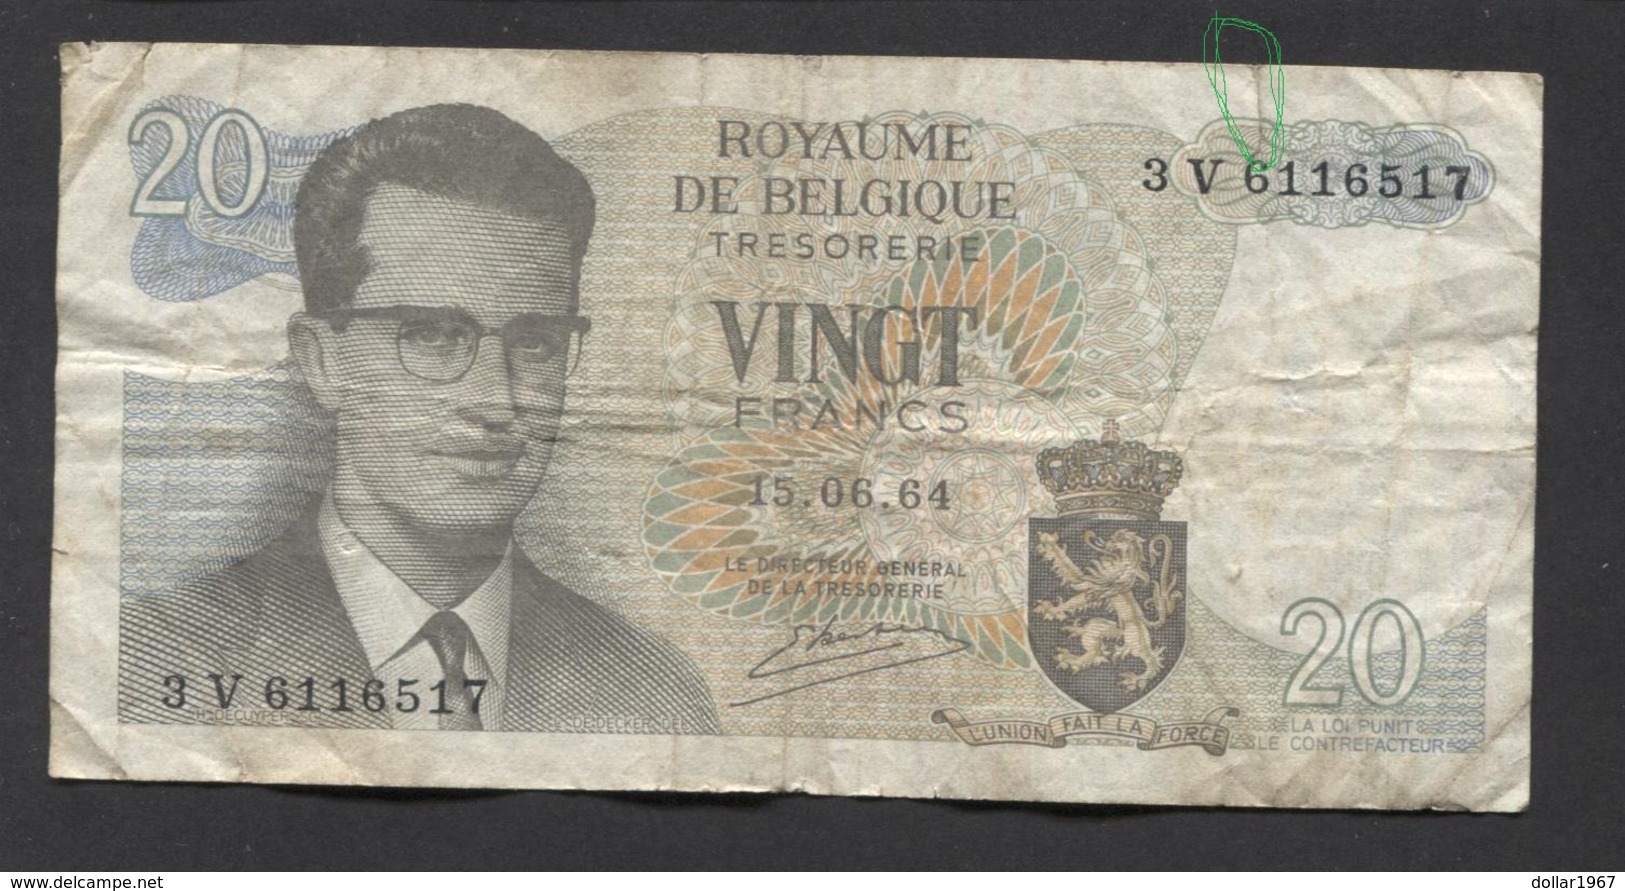 België Belgique Belgium 15 06 1964 -  20 Francs Atomium Baudouin. 3 V 6116317 - 20 Franchi